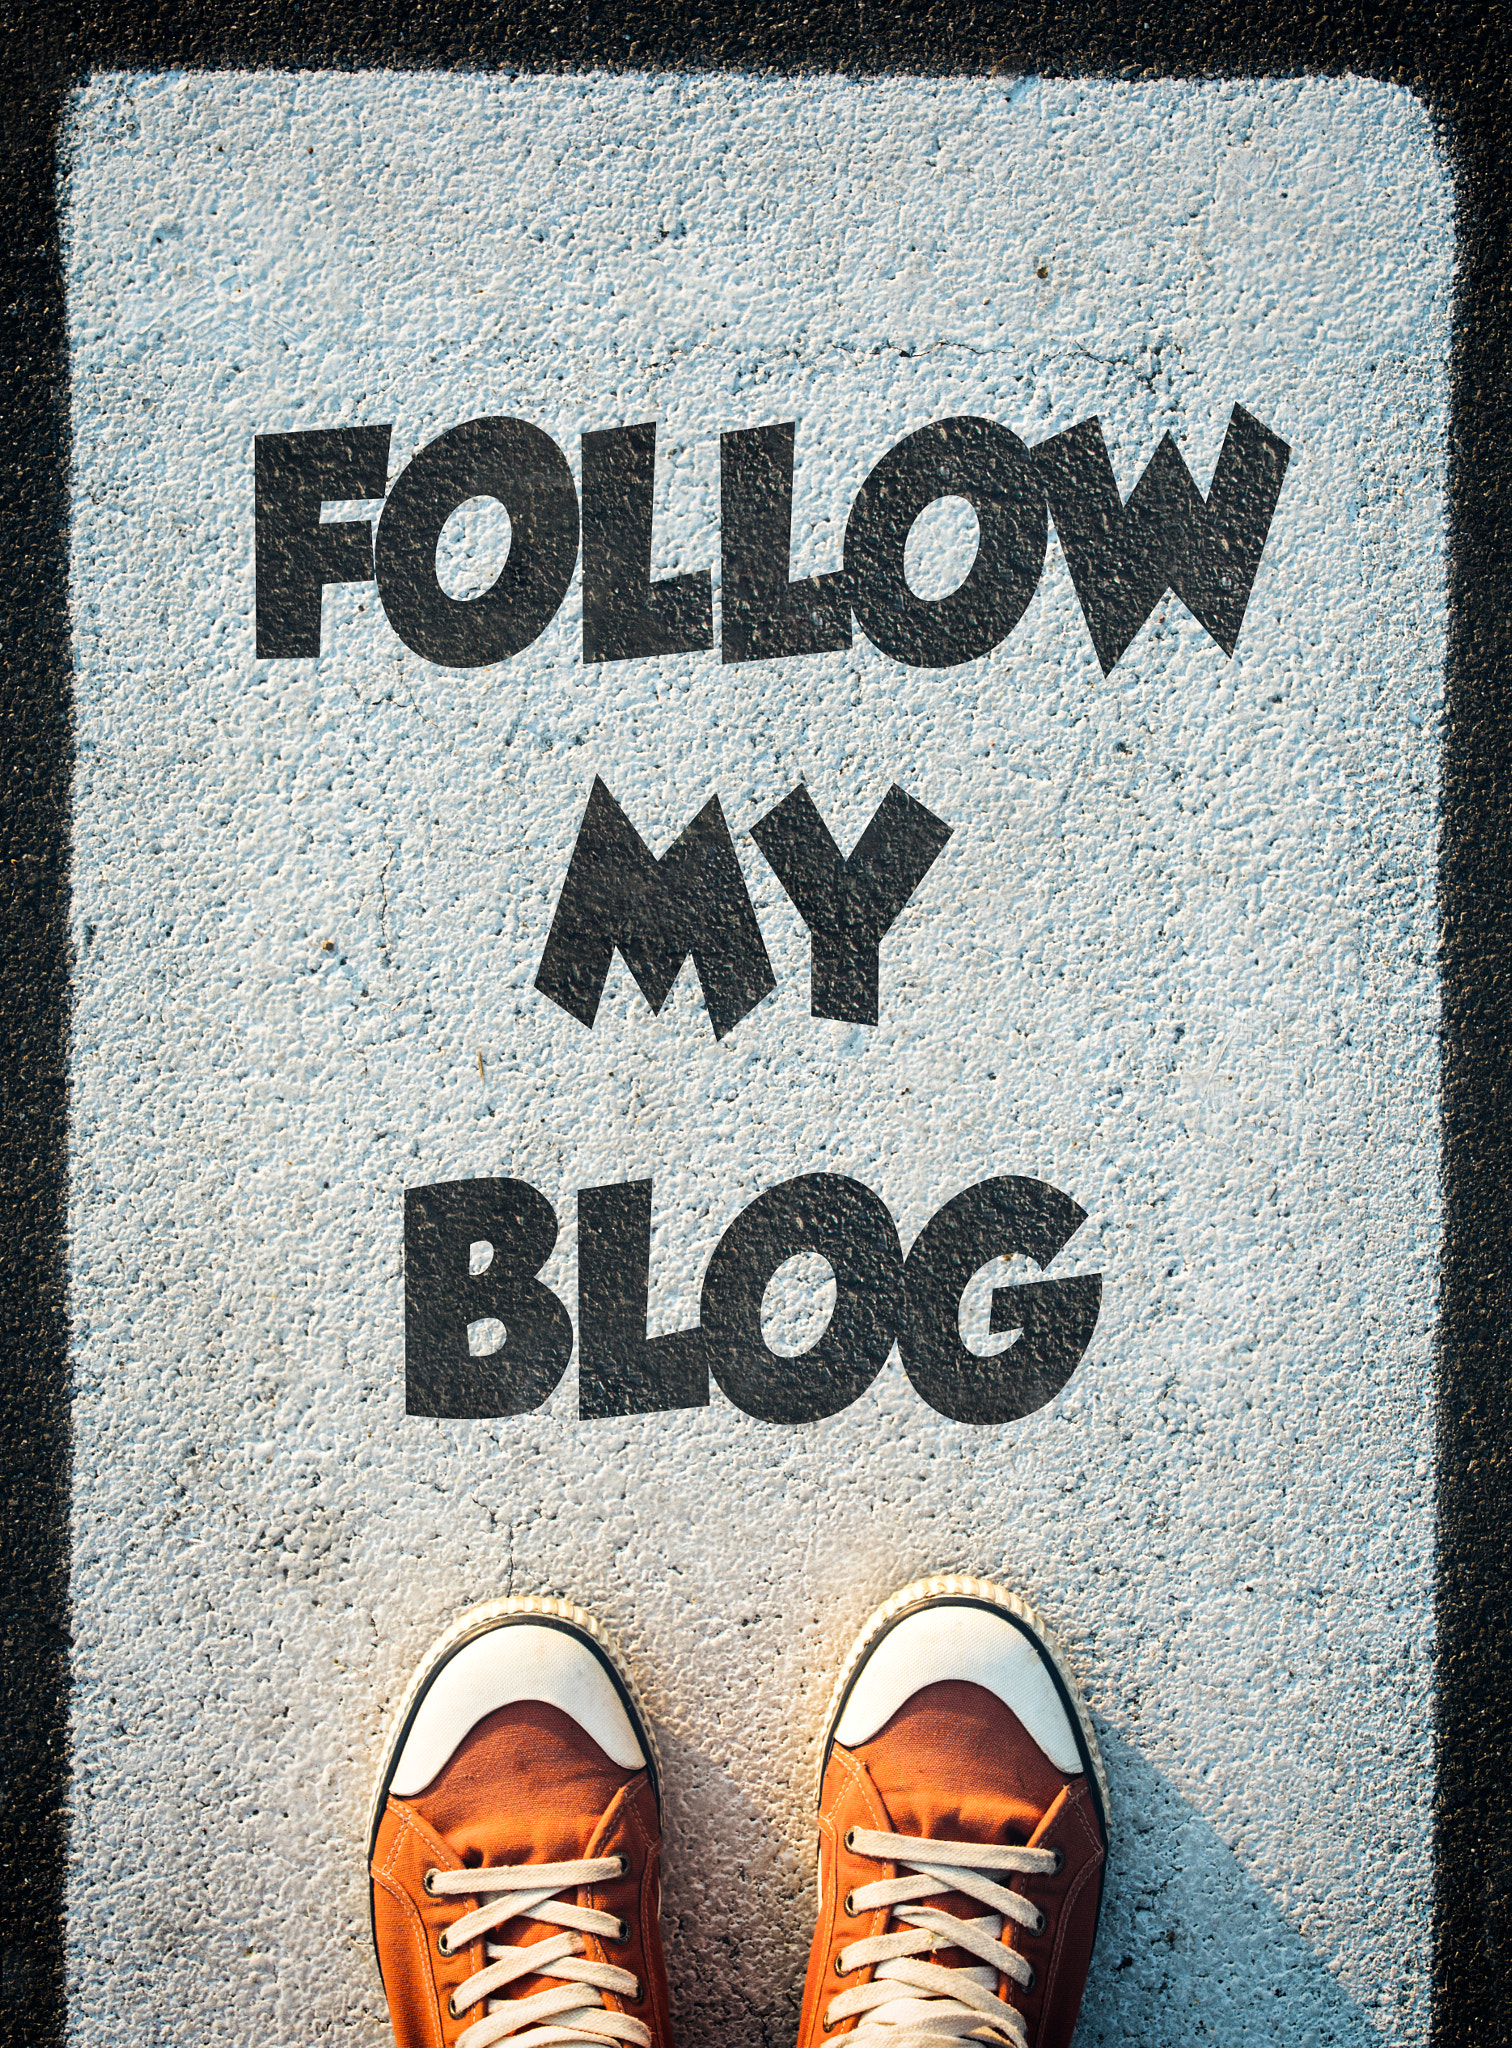 Fallow my blog